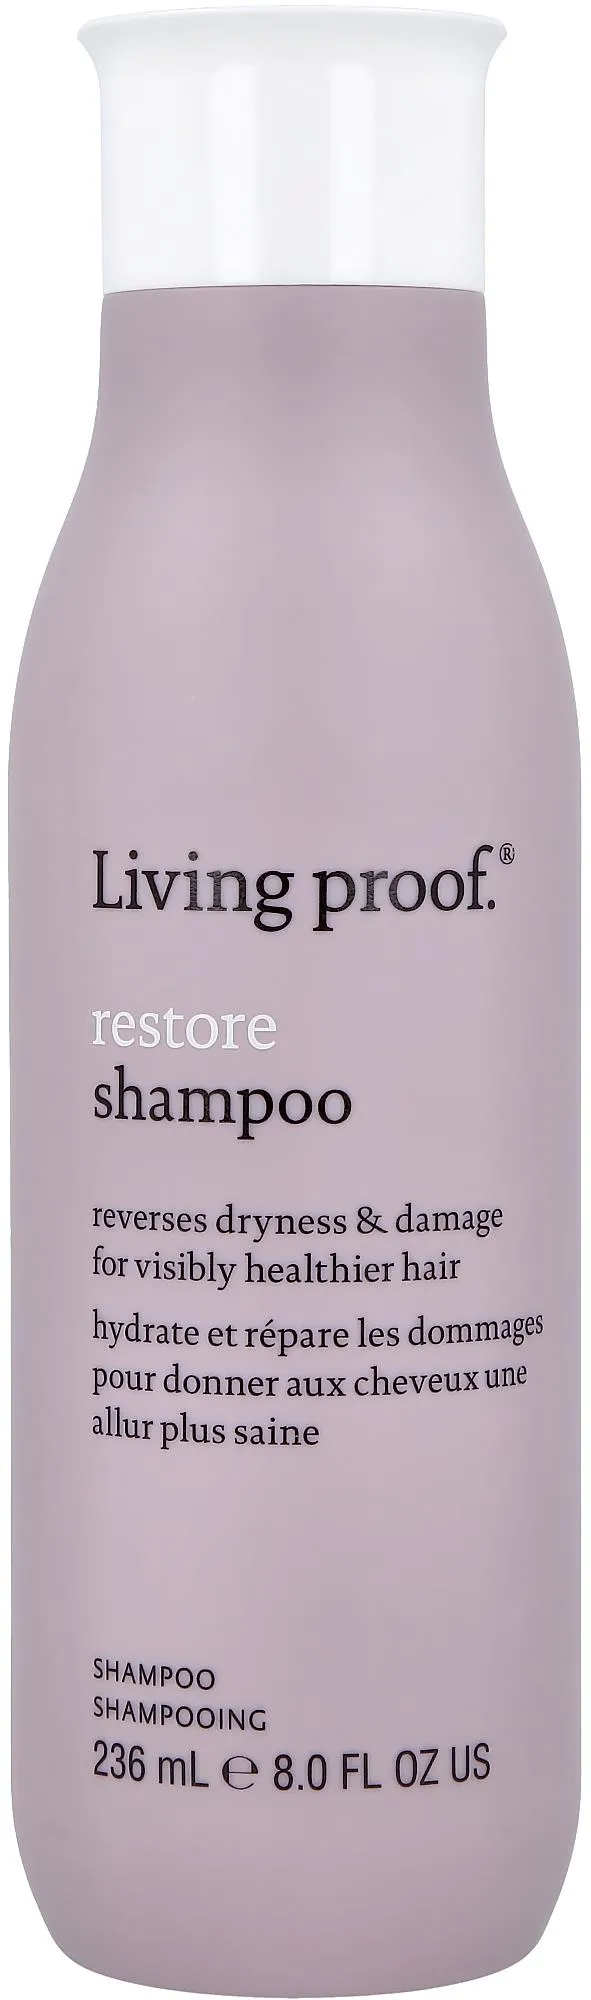 FEMMENORDIC's choice in the Aveda vs Living Proof shampoo comparison, Living Proof Restore Shampoo